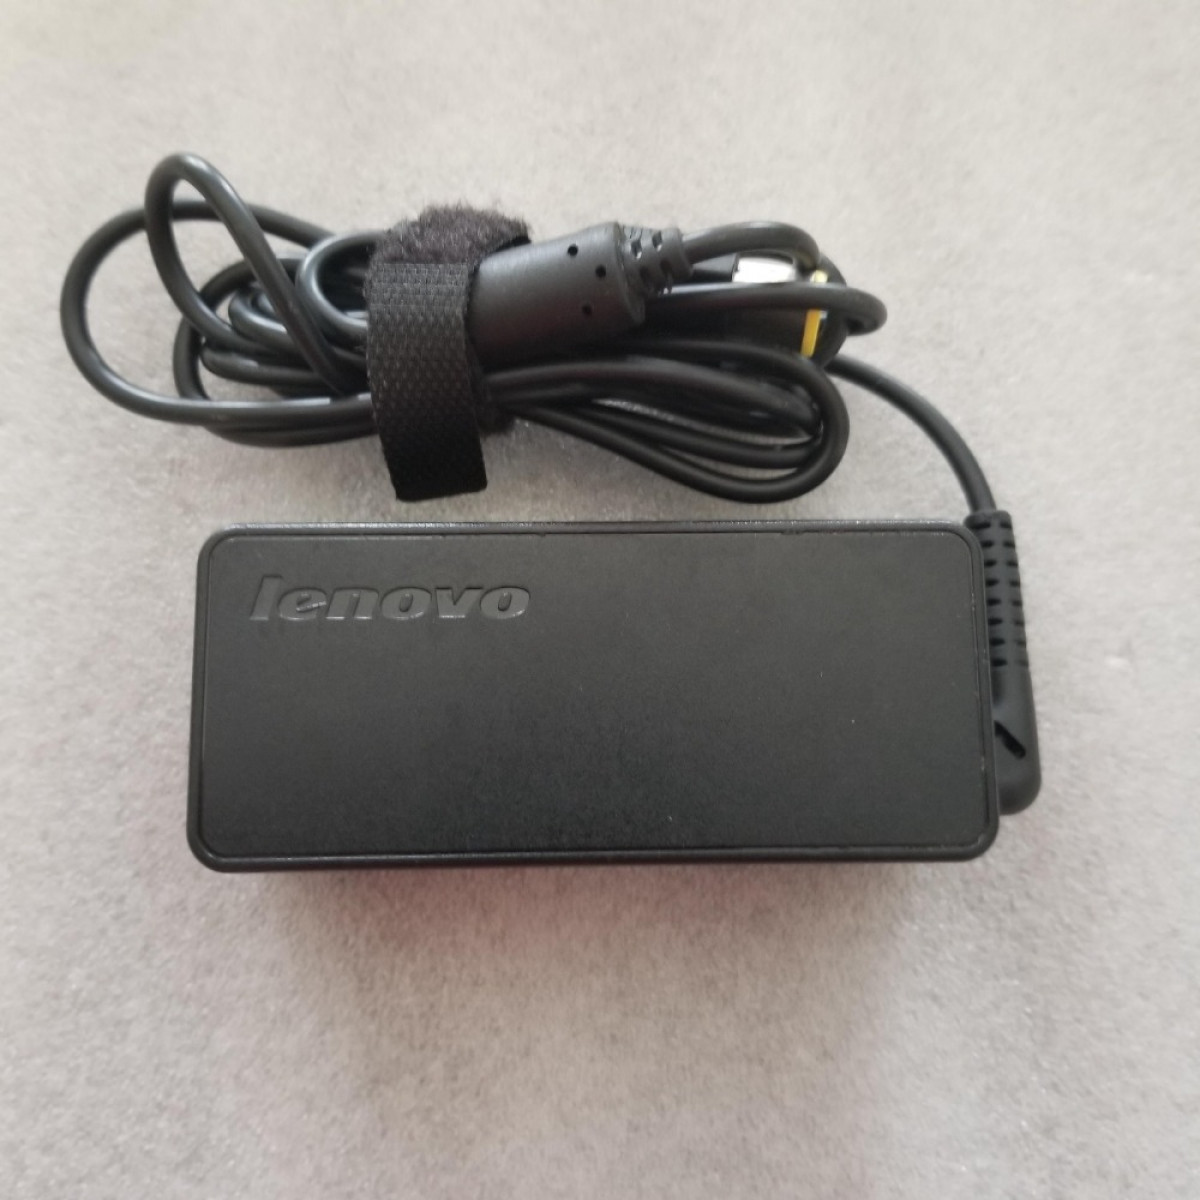 LENOVO 20V 2.25A USB Petak Kuning ADLX45NCC3A Original Bawaan Laptop